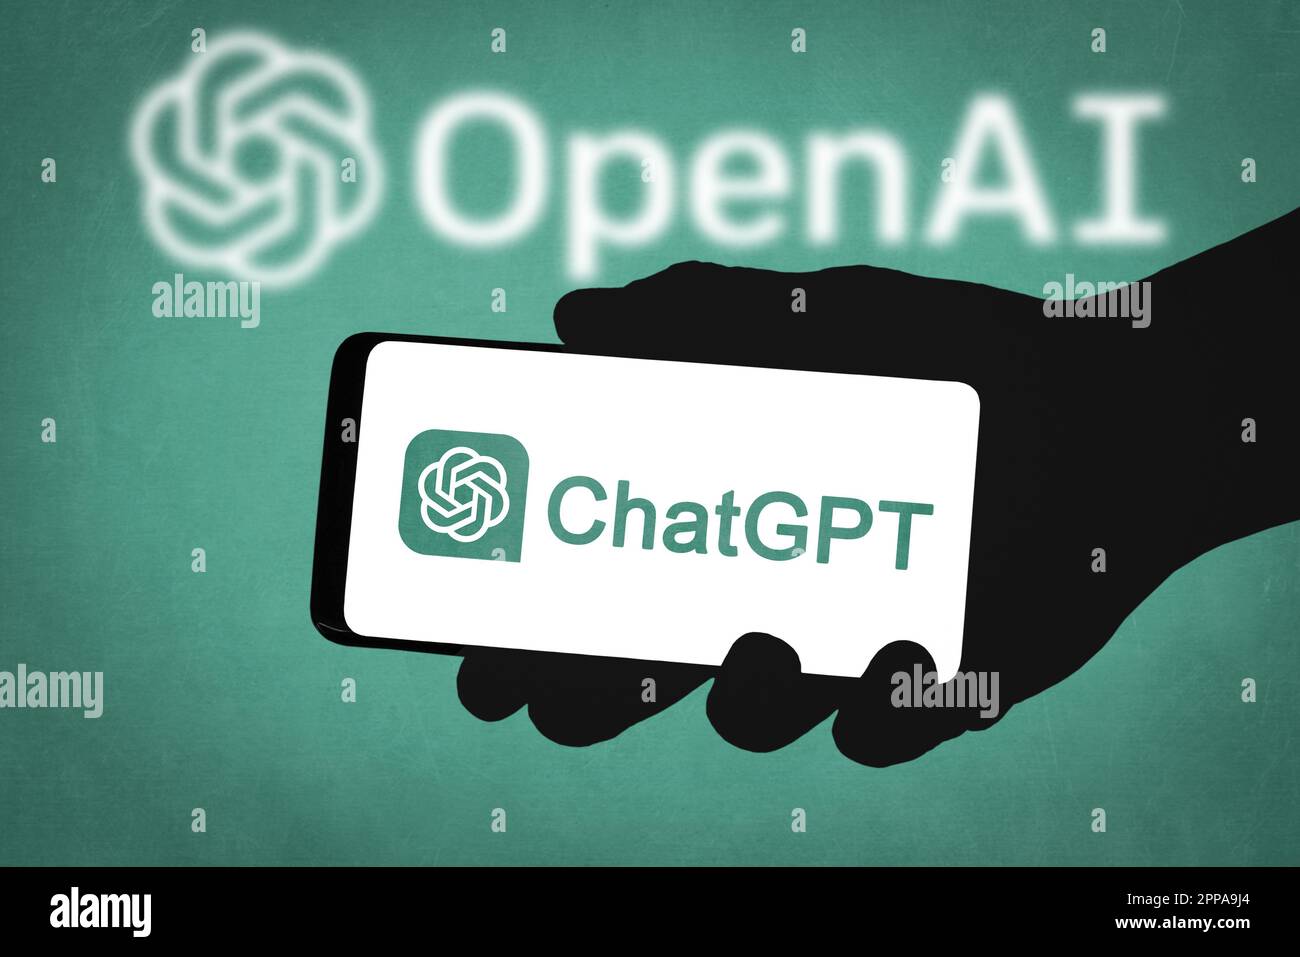 ChatGPT - artificial intelligence AI chatbot by OpenAI Stock Photo